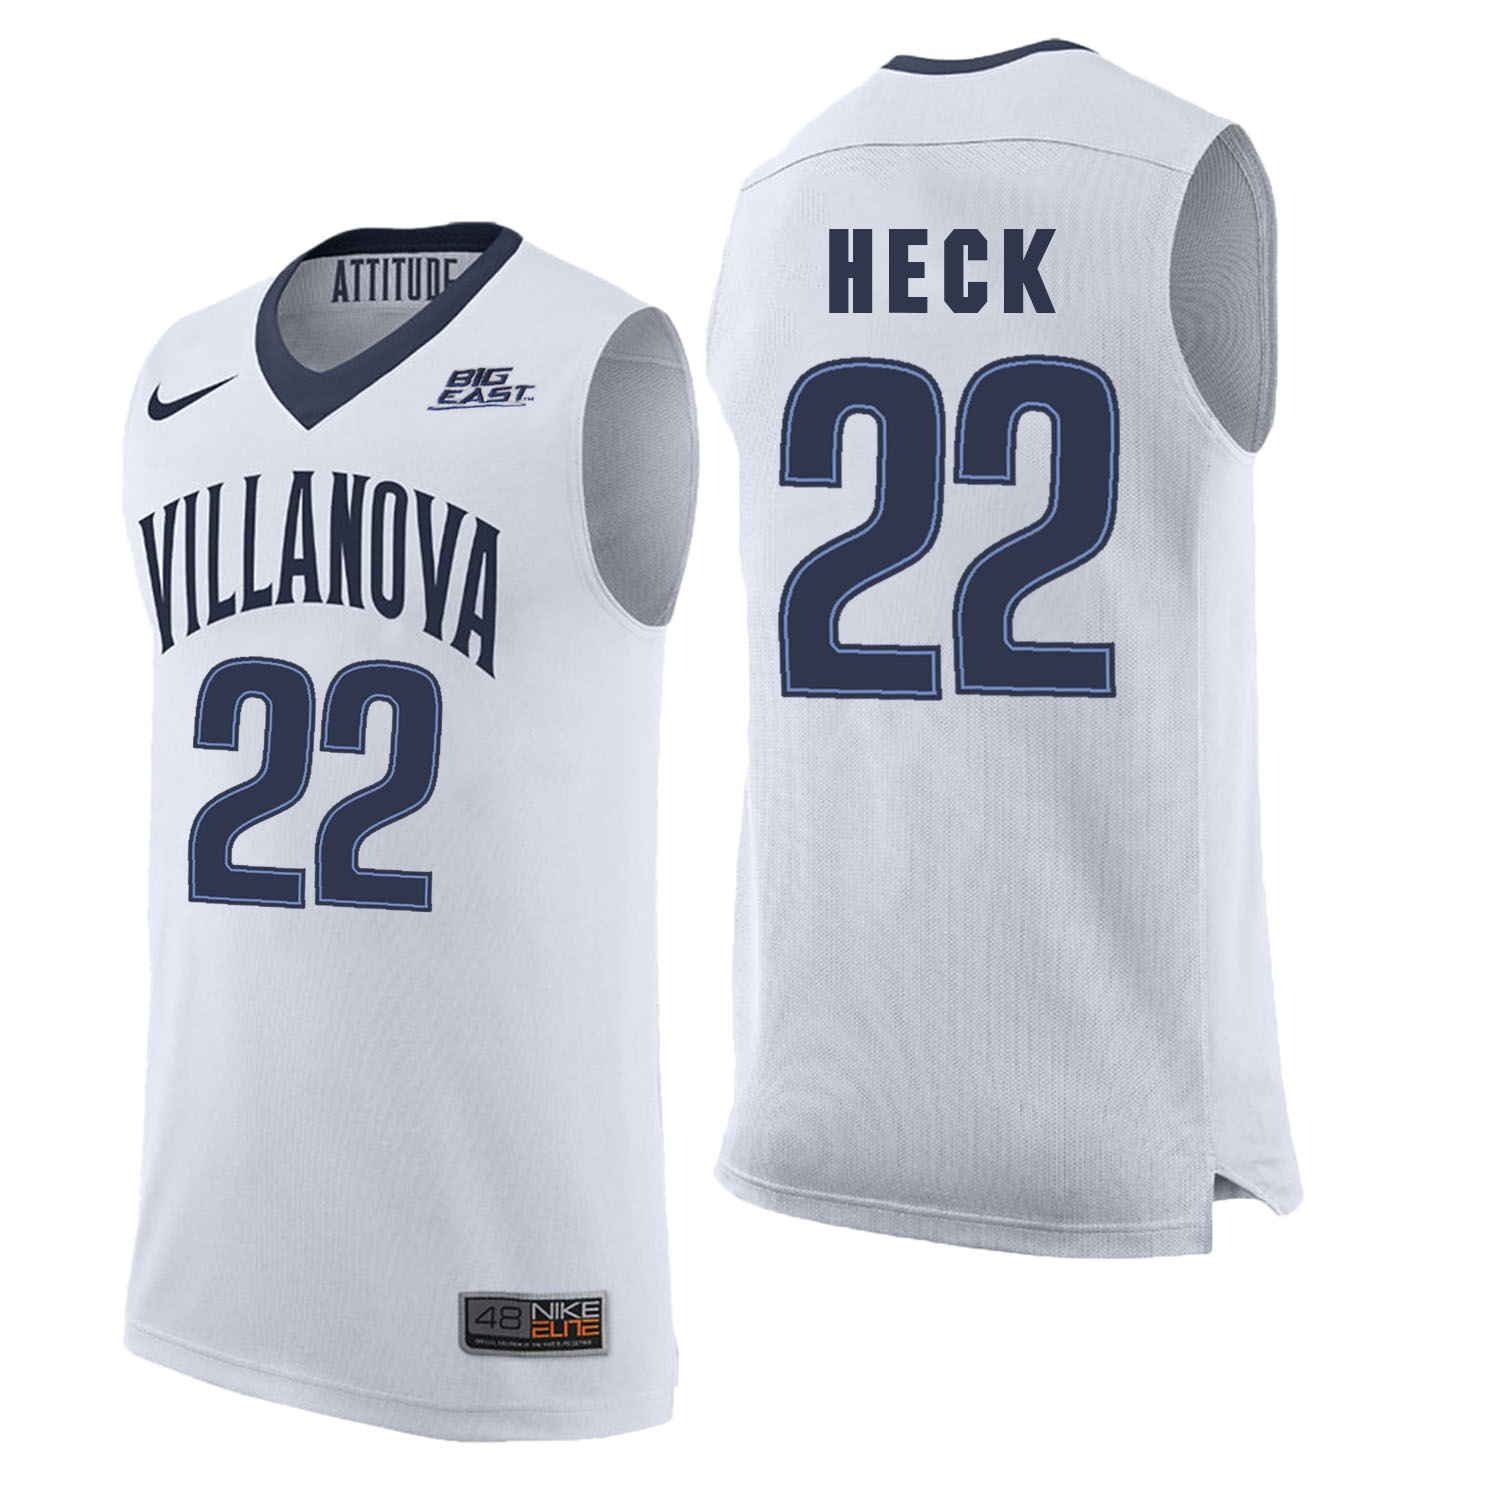 Villanova Wildcats 22 Peyton Heck White College Basketball Elite Jersey